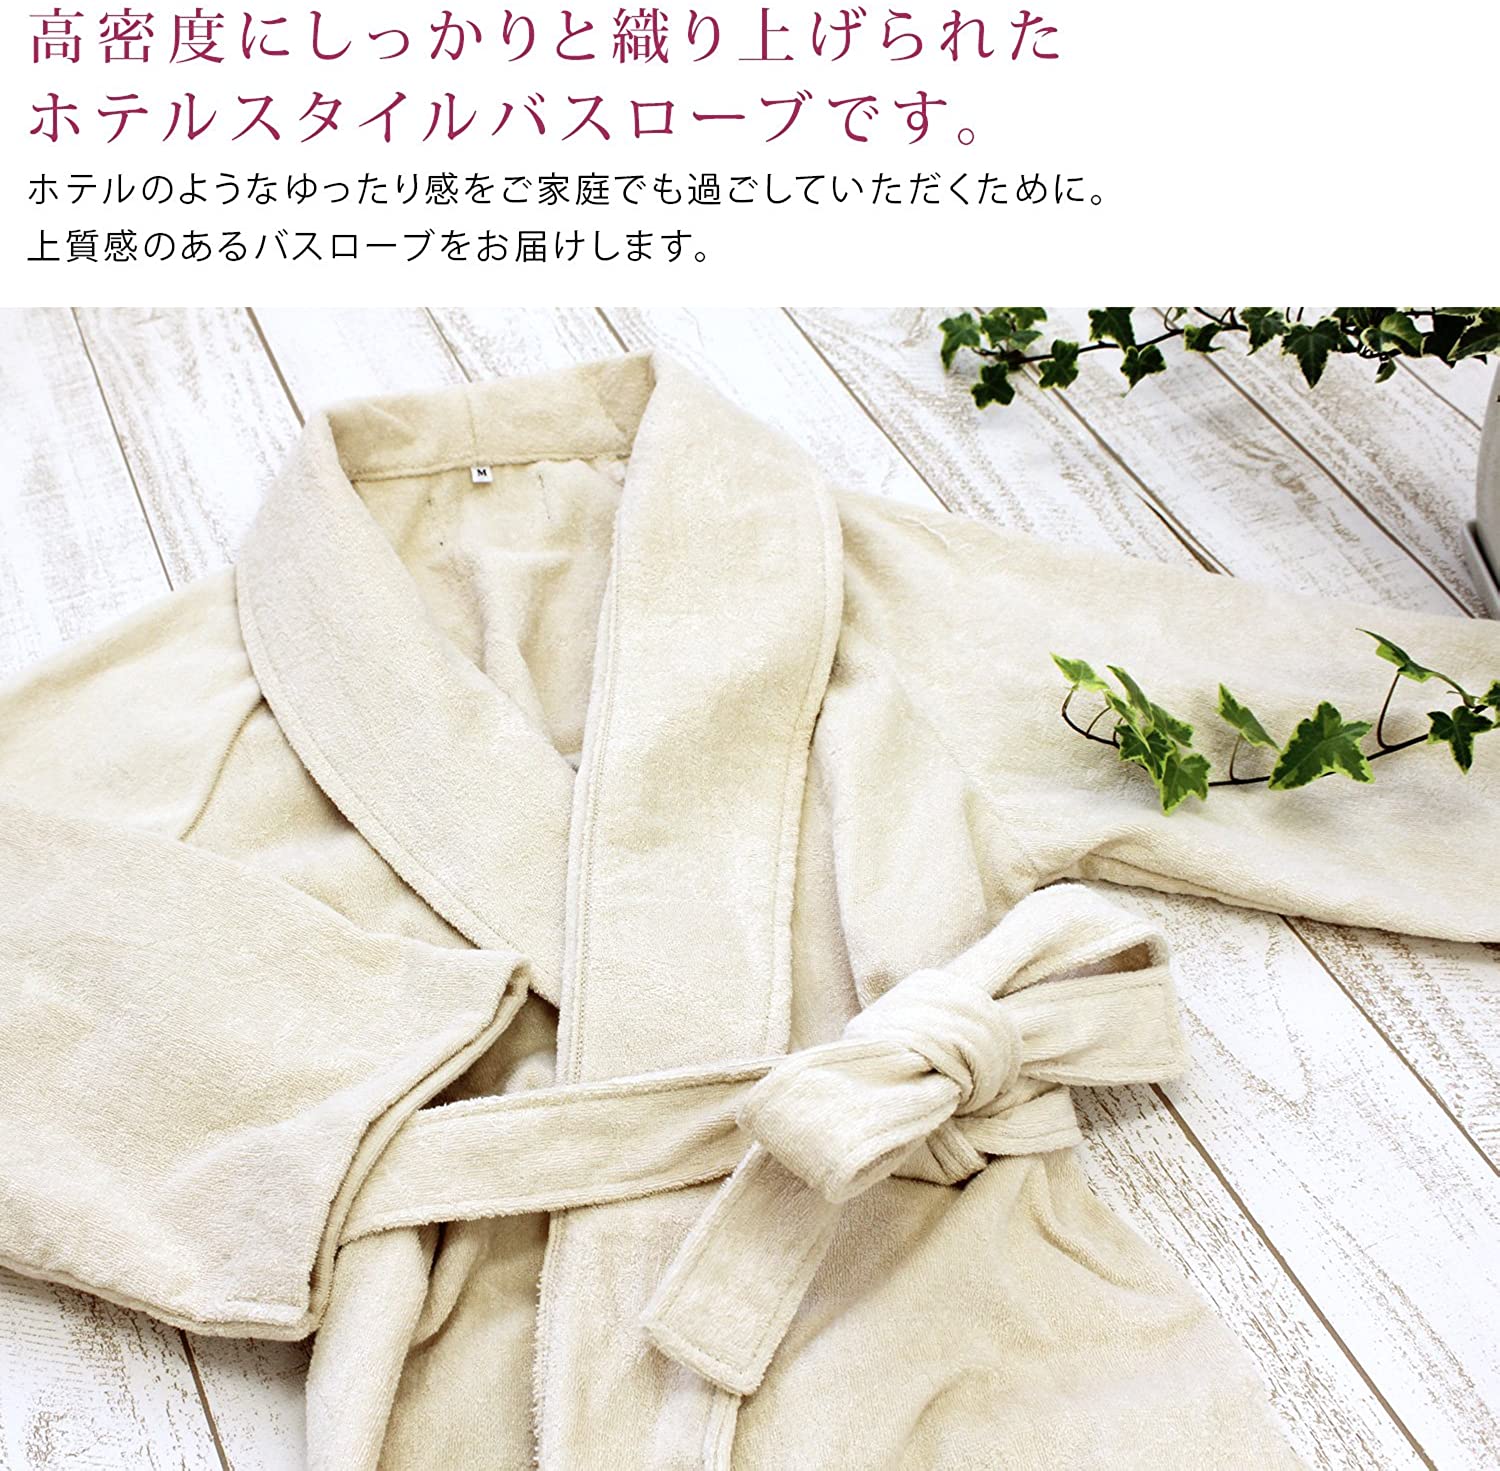 hiorie(ヒオリエ) 日本製 ホテルスタイル バスローブの商品画像2 